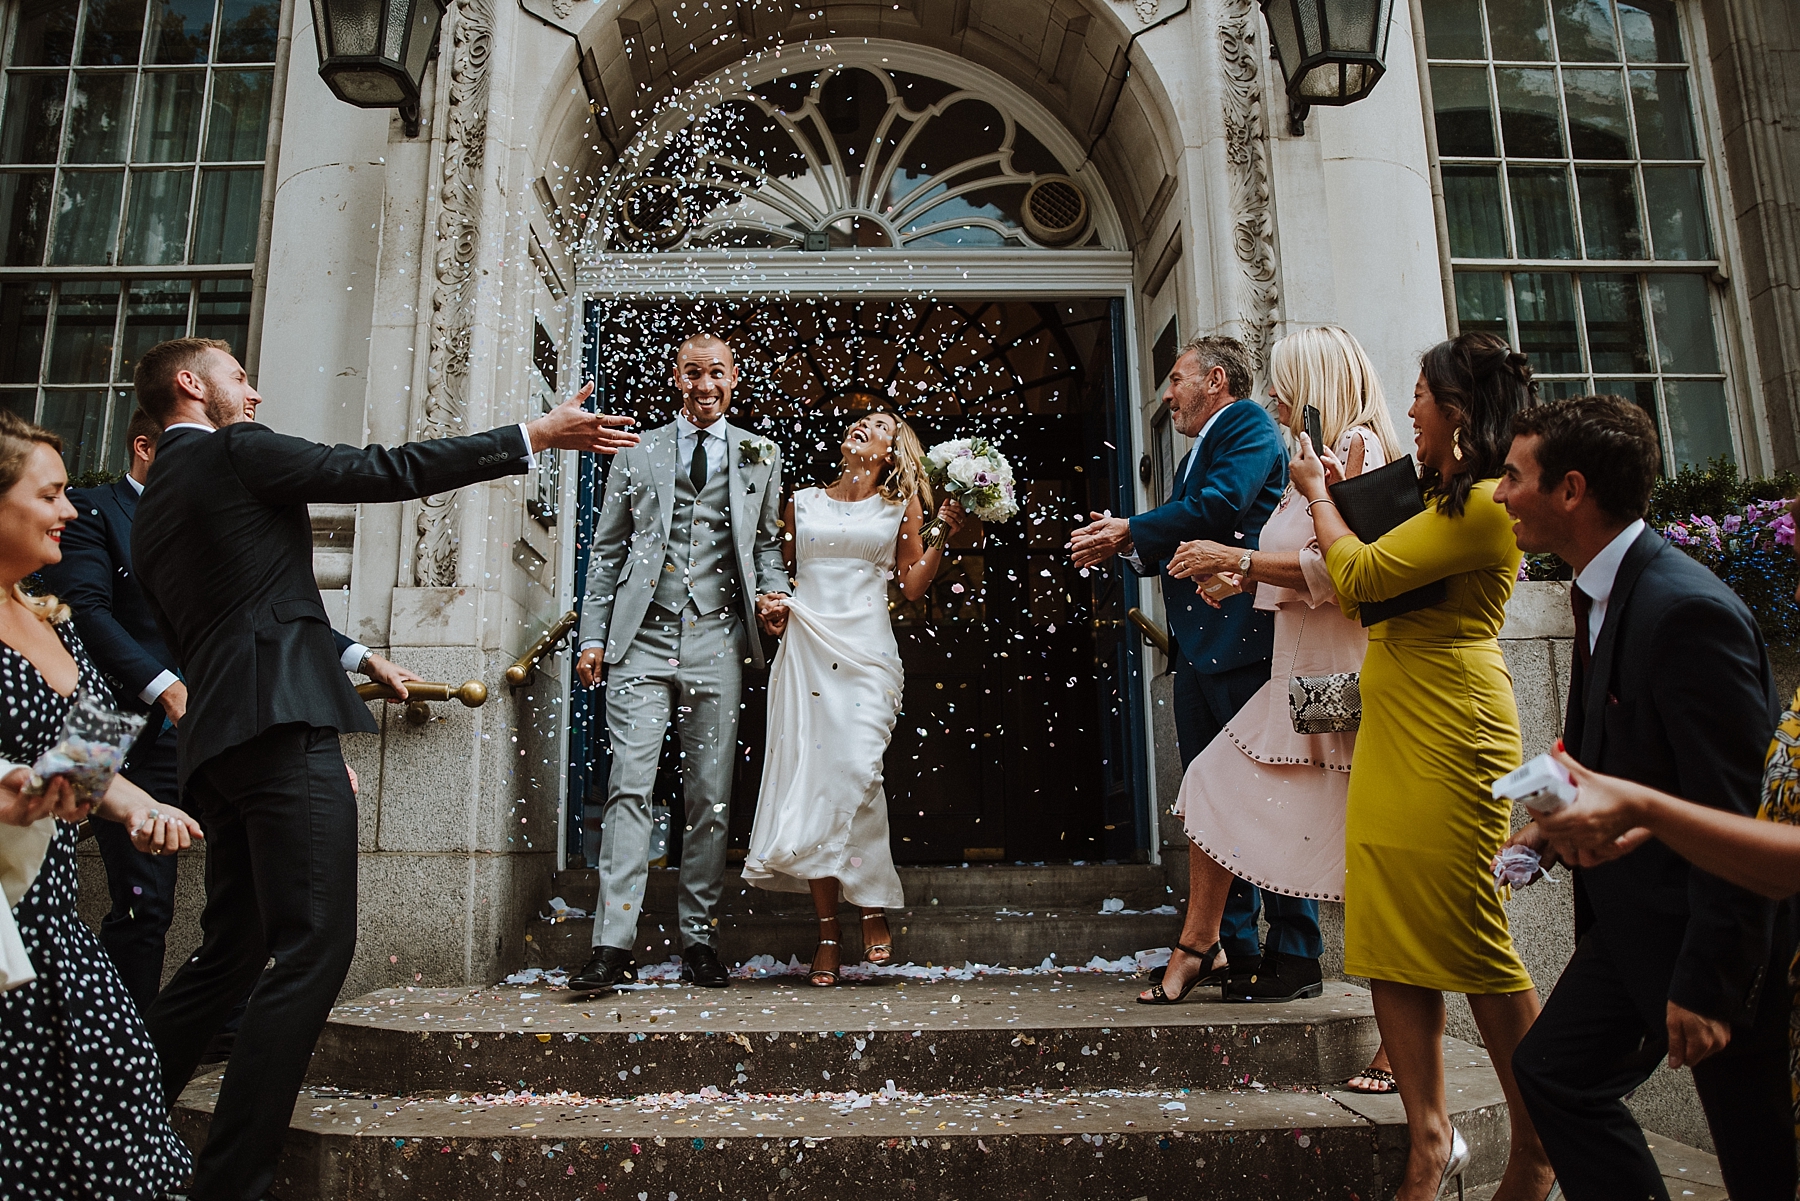 Wedding photographer in London, Kent, Surrey and Essex.